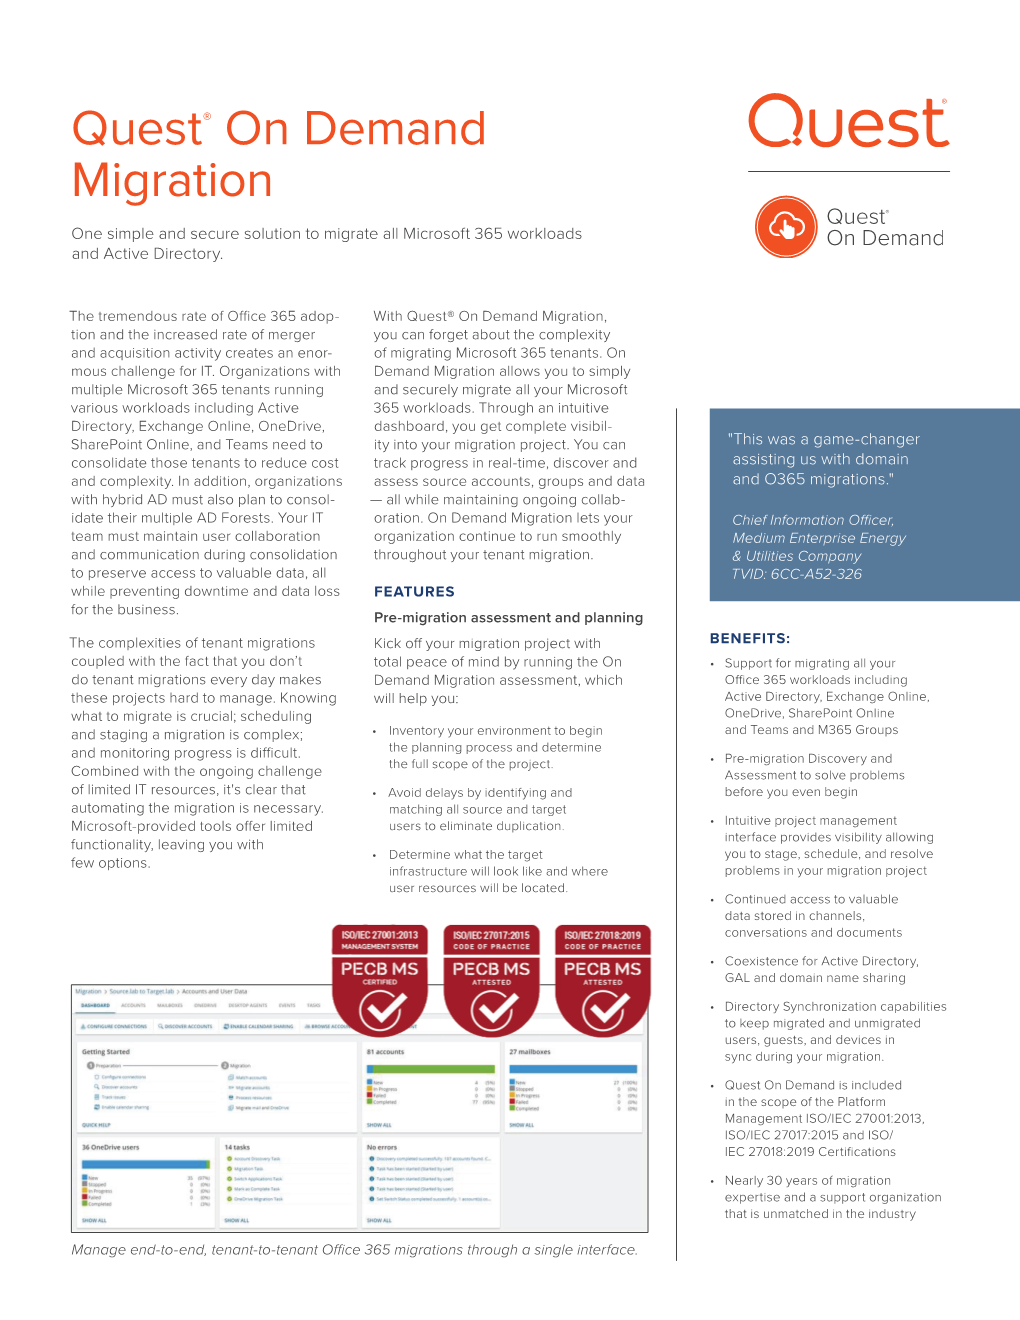 Quest on Demand Migration for Office 365 Workloads | Datasheet